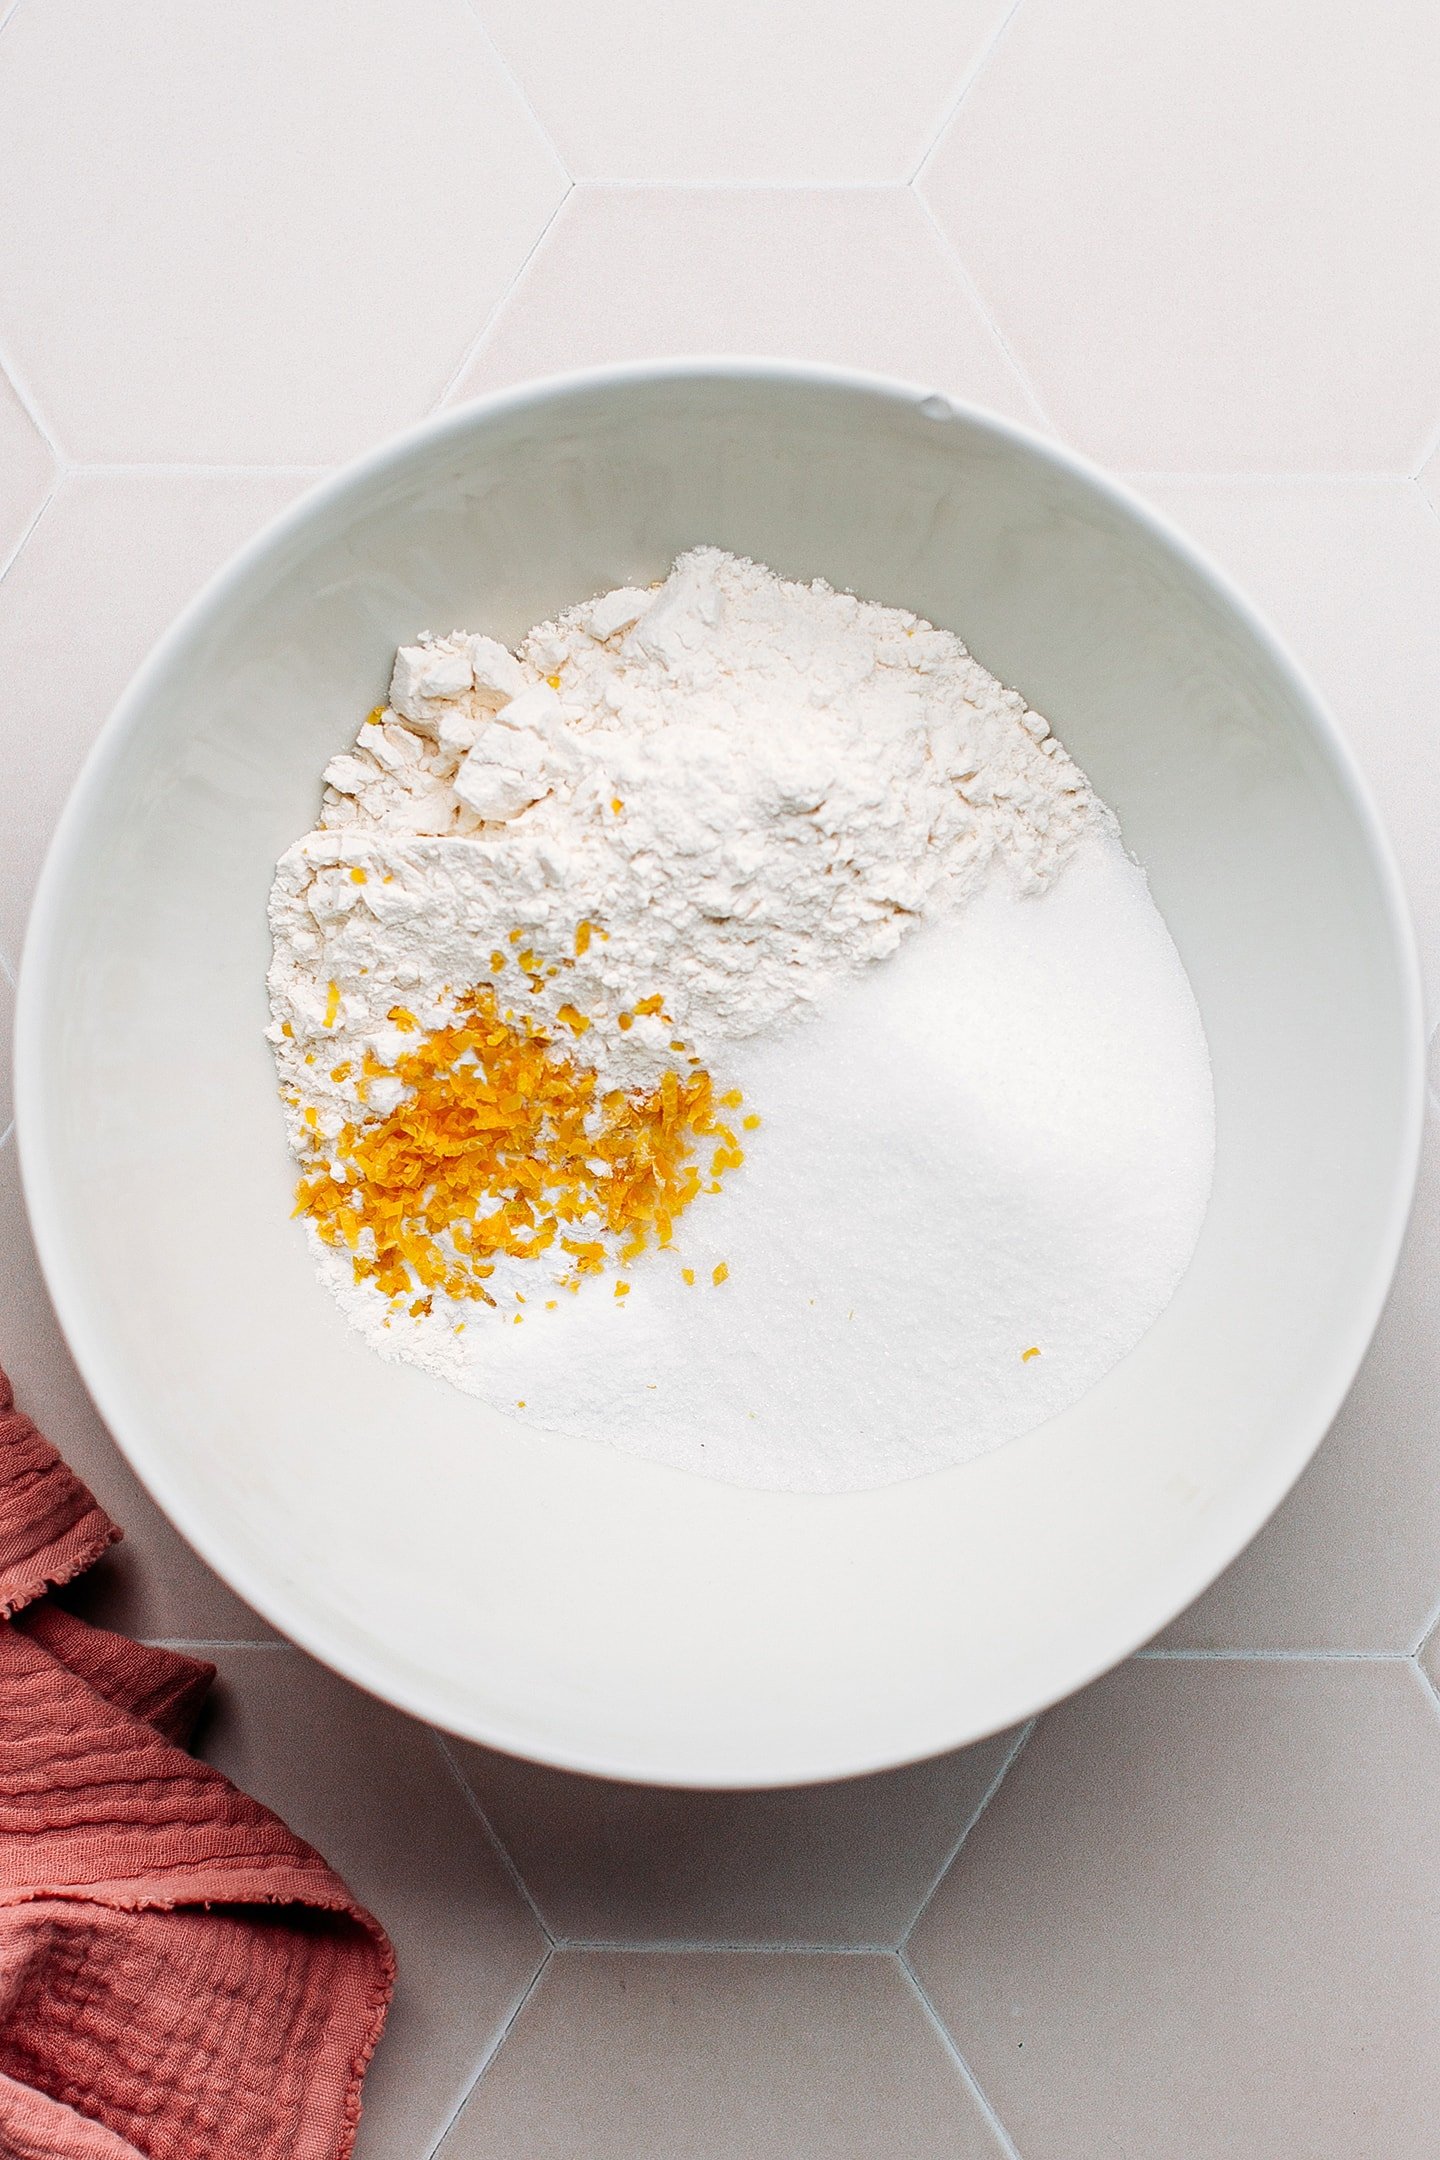 Flour, sugar, baking powder, and lemon zest in a mixing bowl.